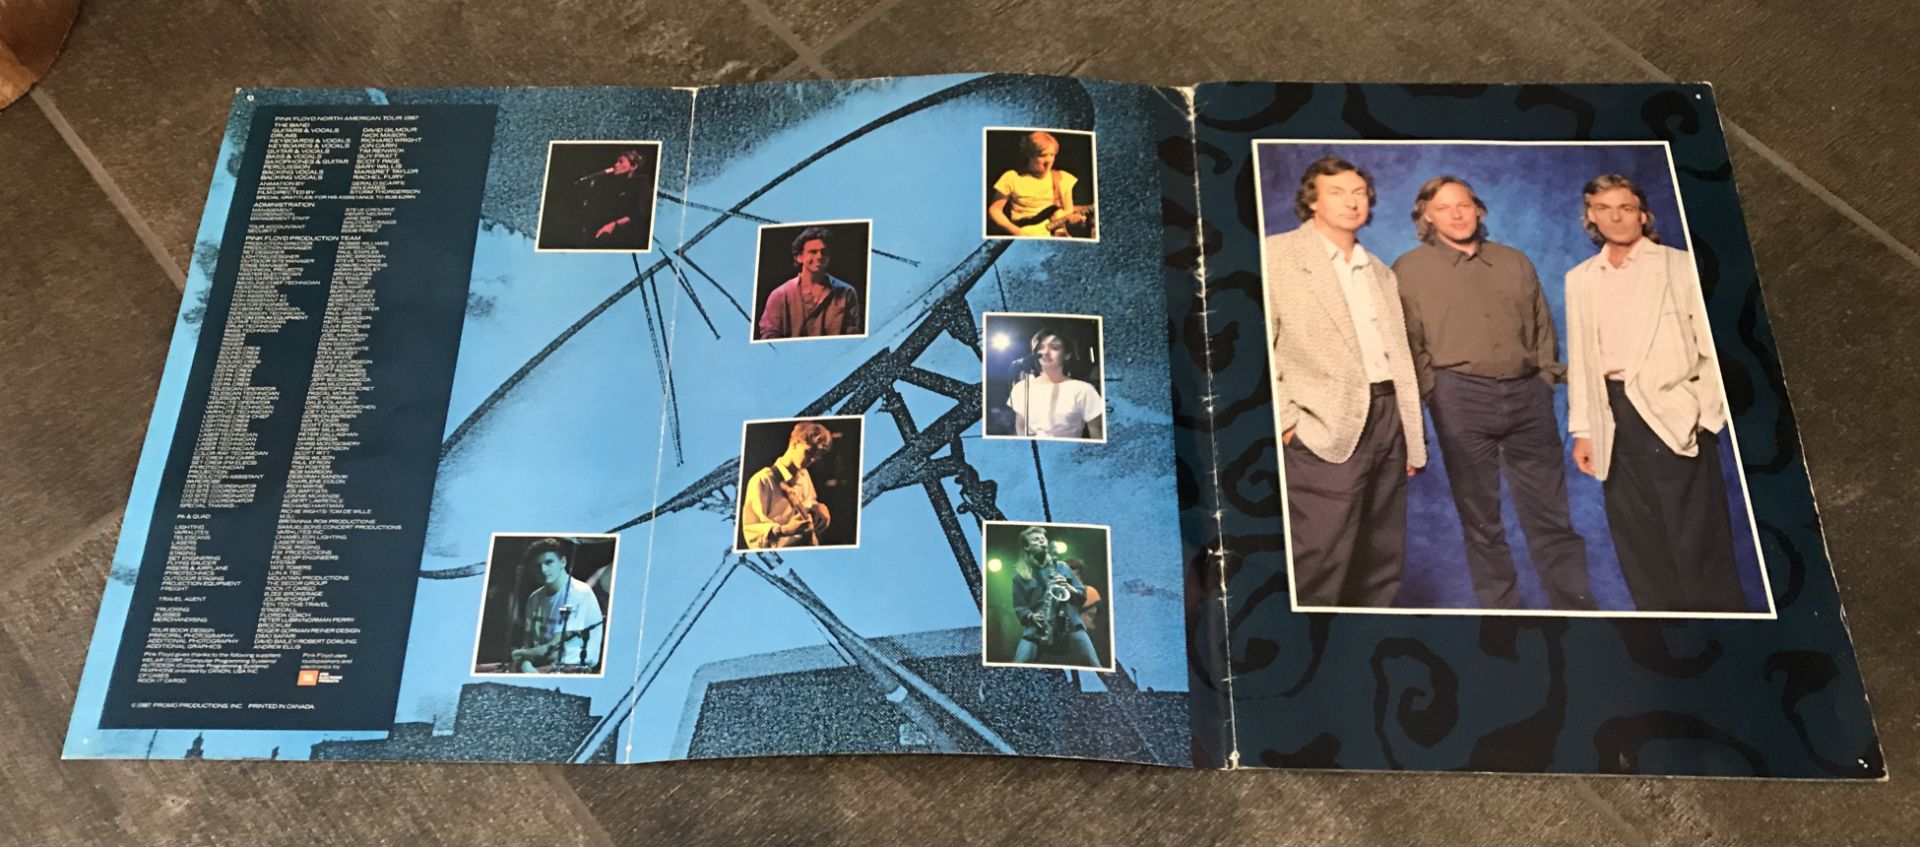 PINK FLOYD TOUR PROGRAM 1987 - Image 2 of 4